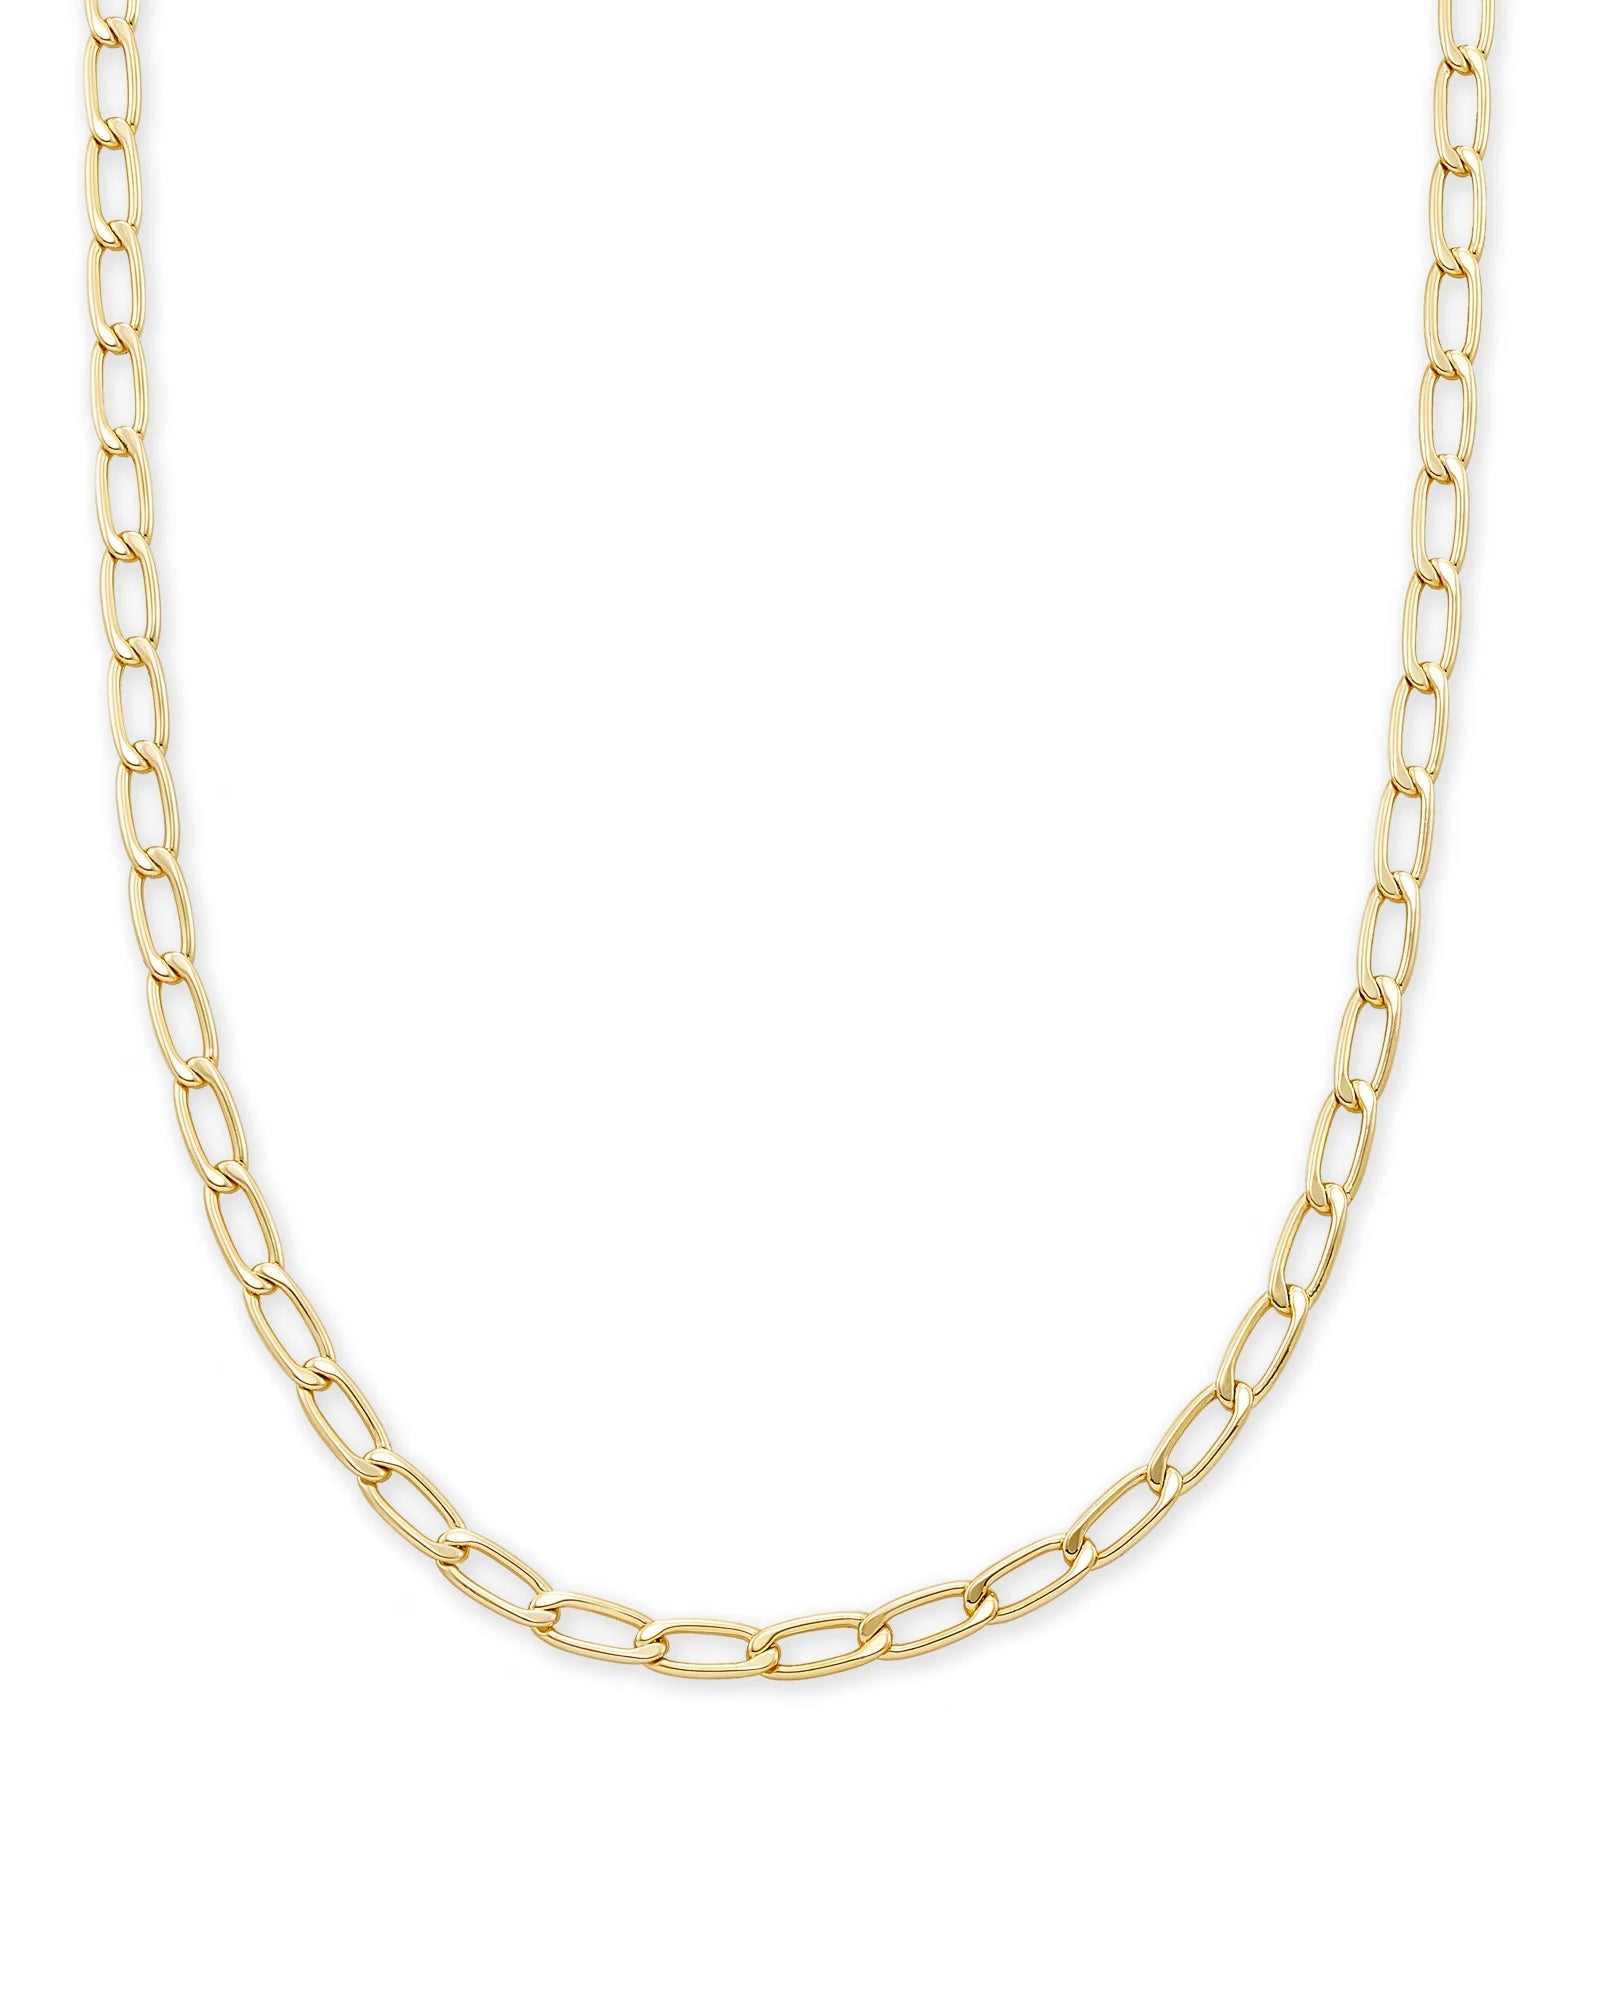 Merrick Chain Necklace - Kendra Scott - Image 1